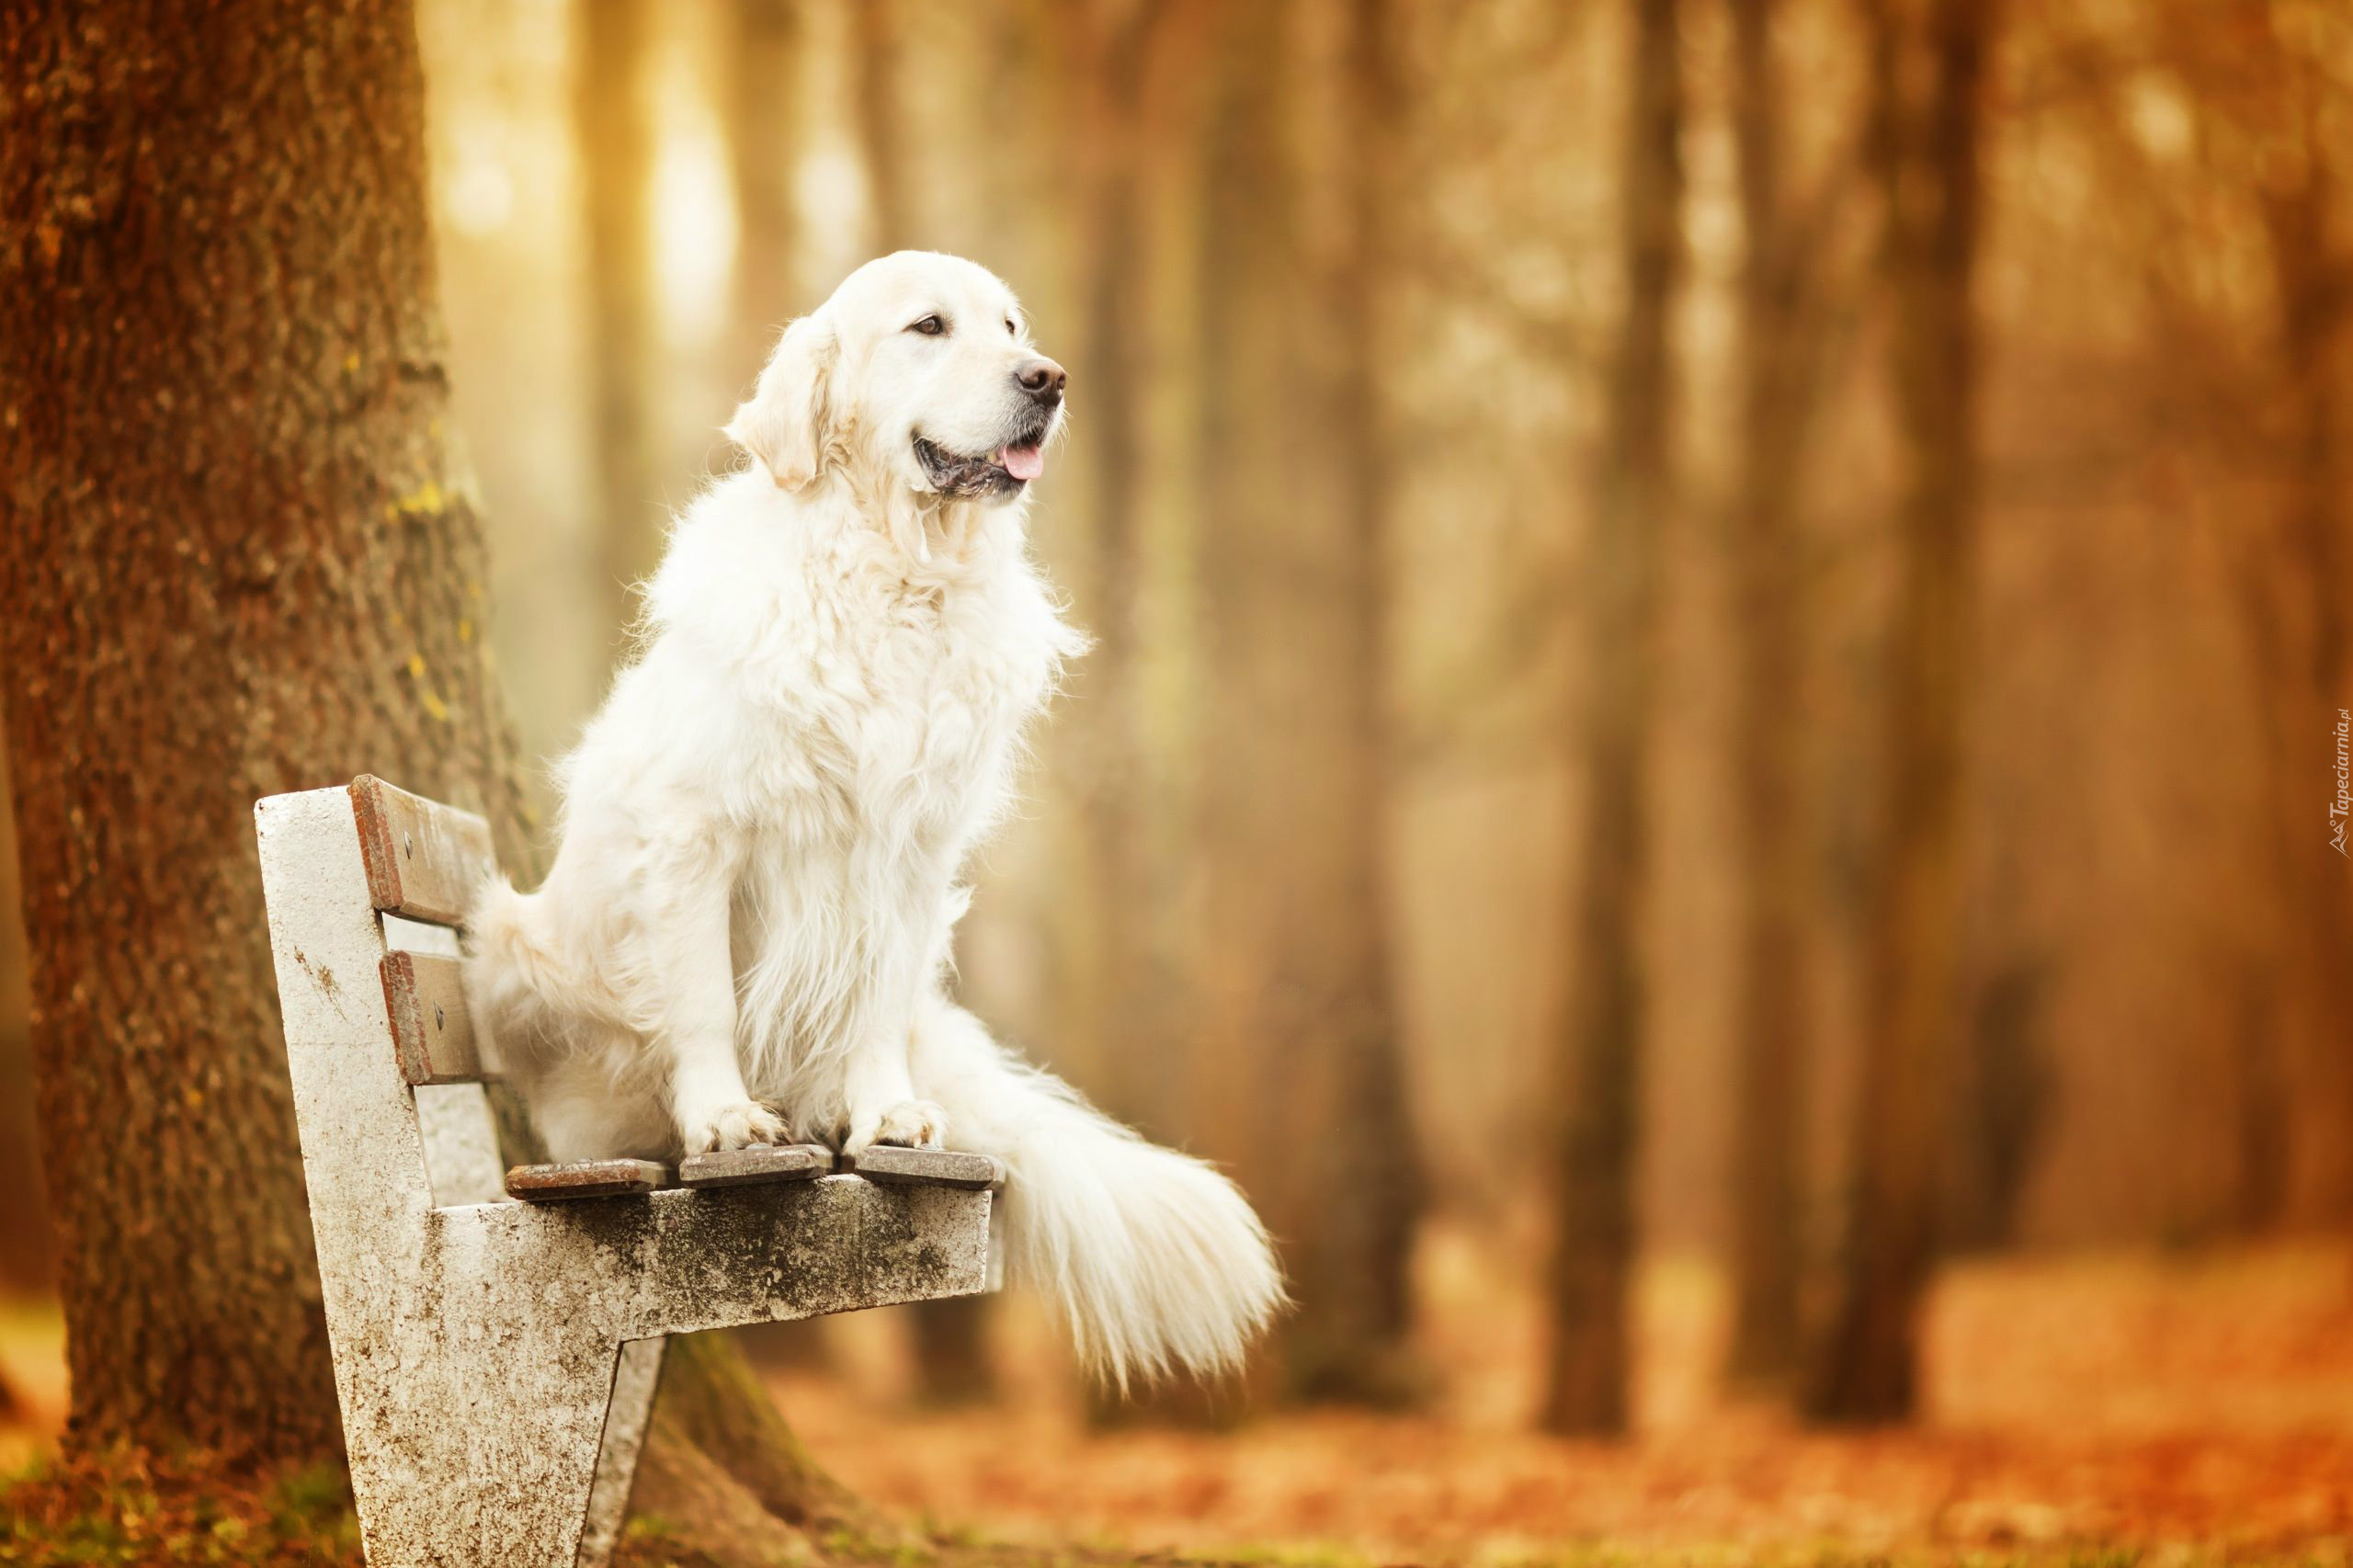 Pies, Golden retriever, Ławka, Drzewo